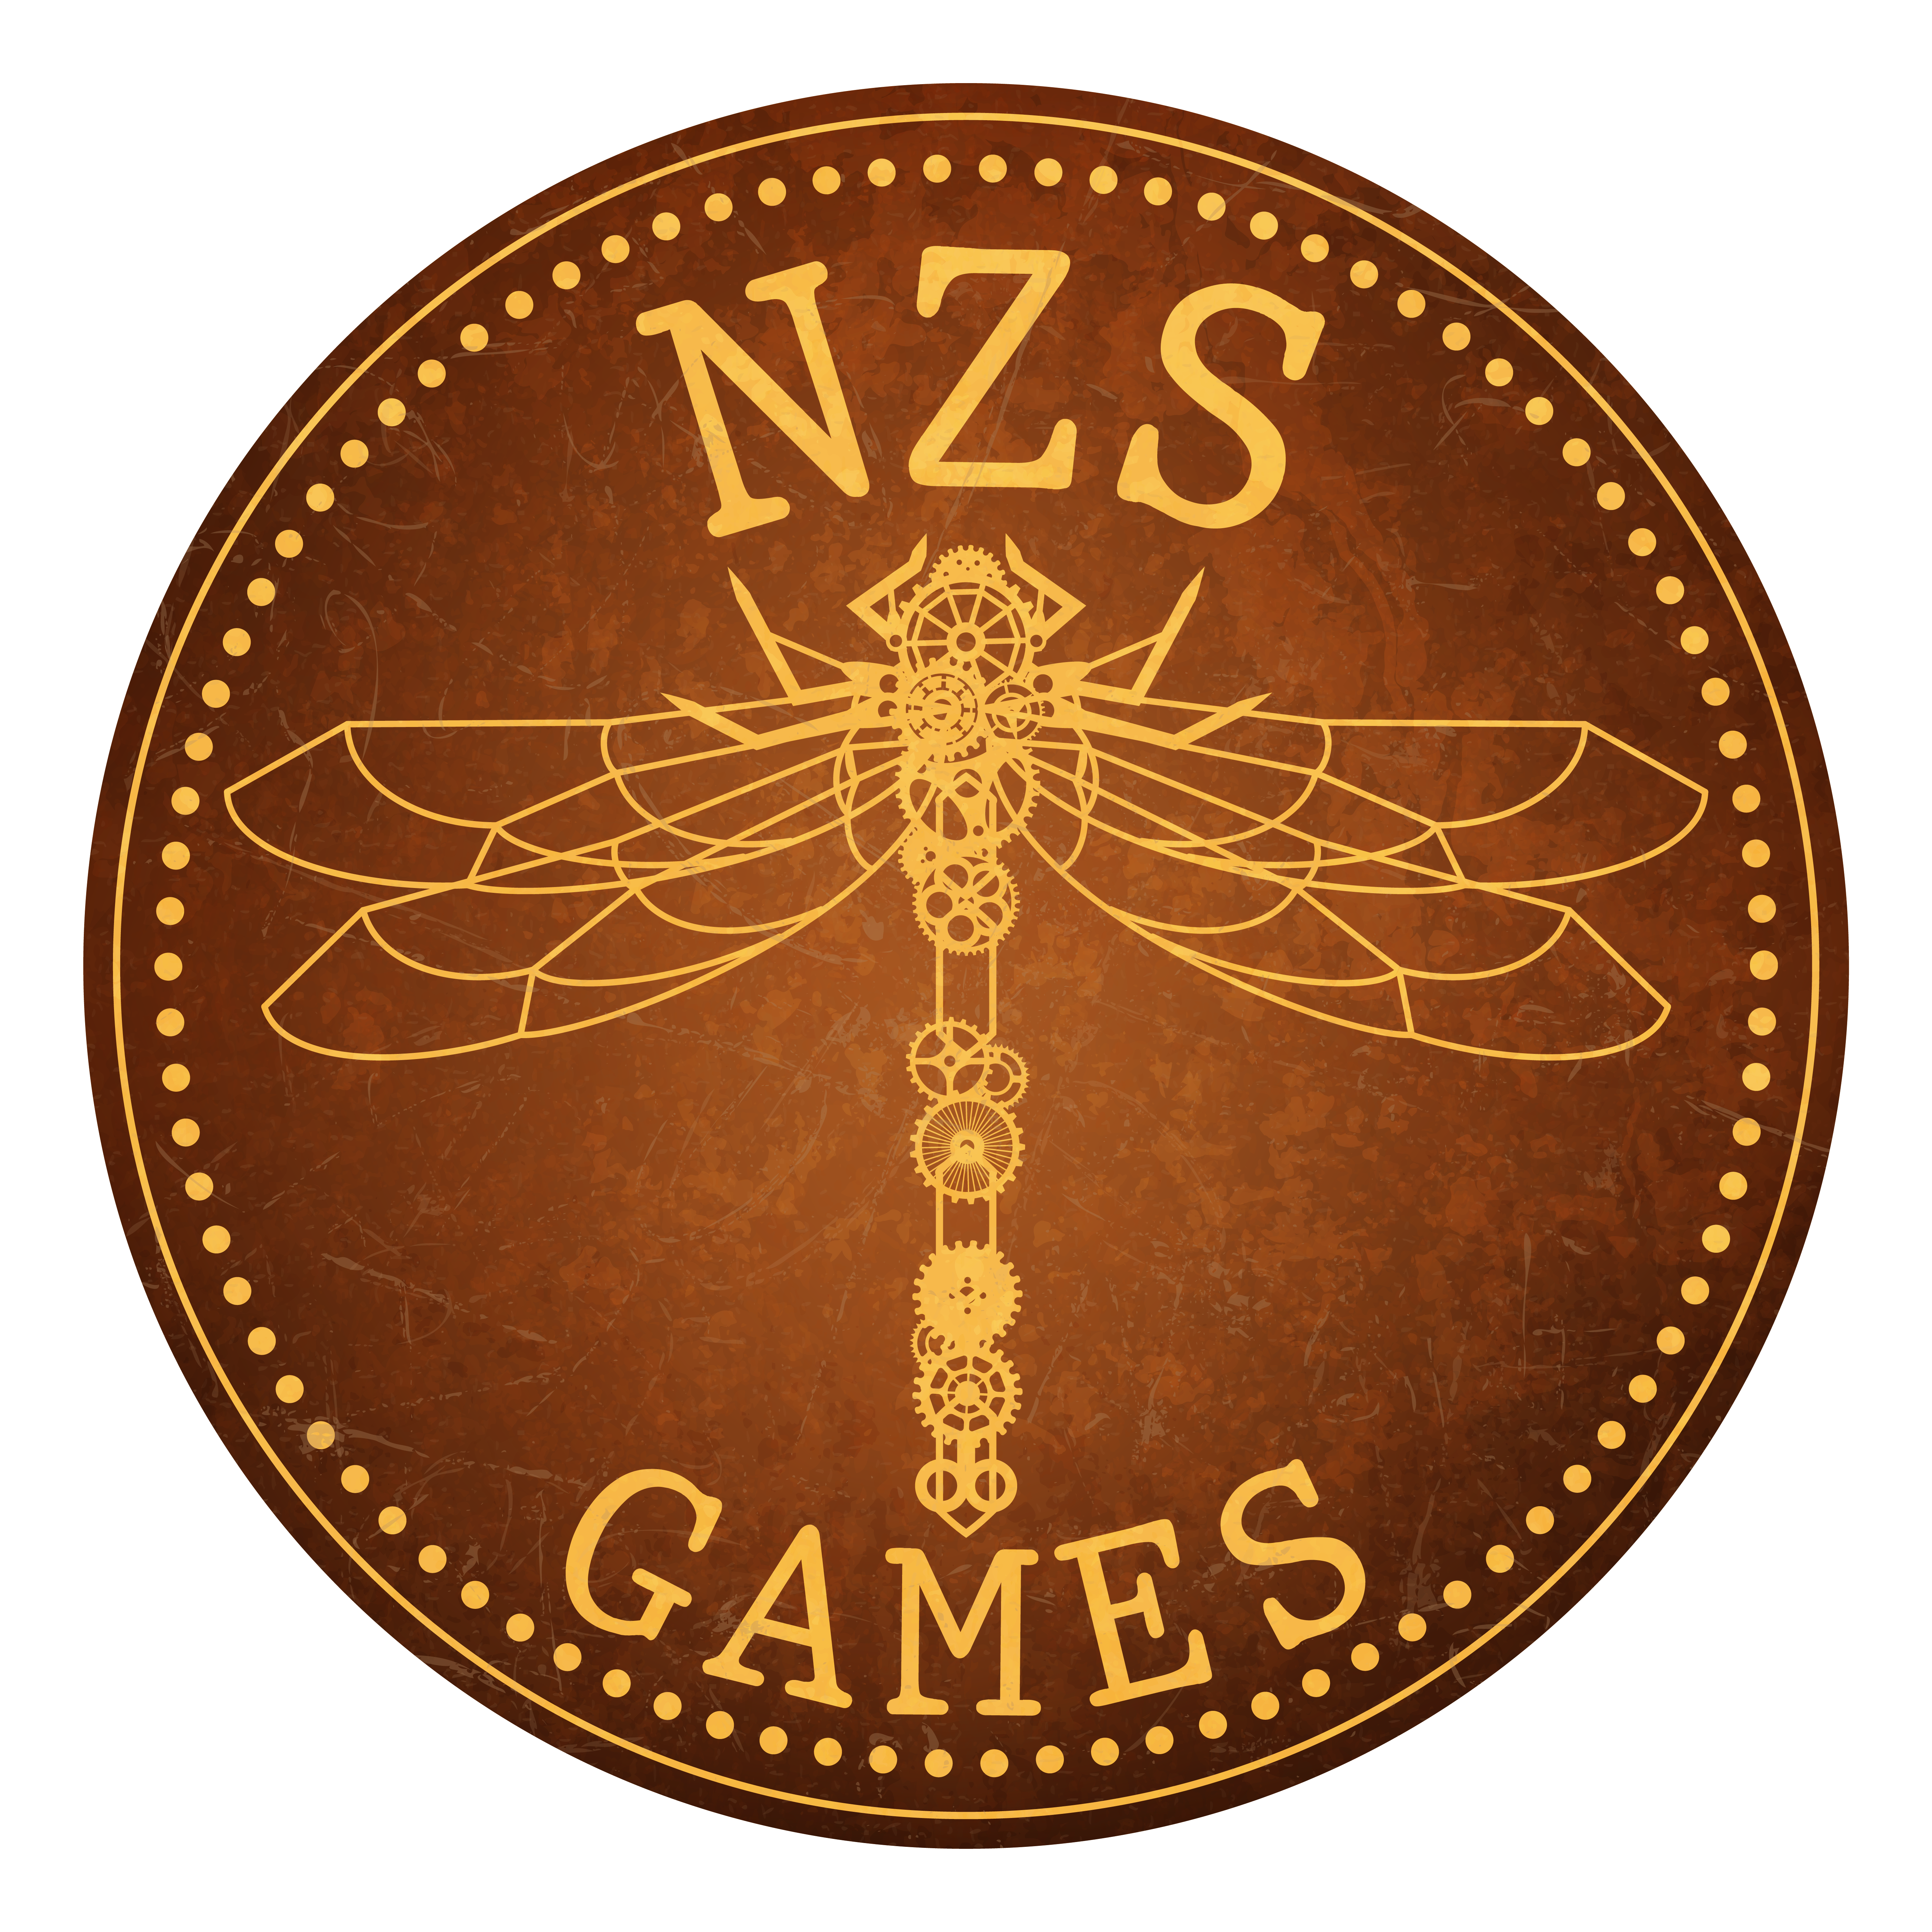 NZS Games Logo by Marcie Clowry